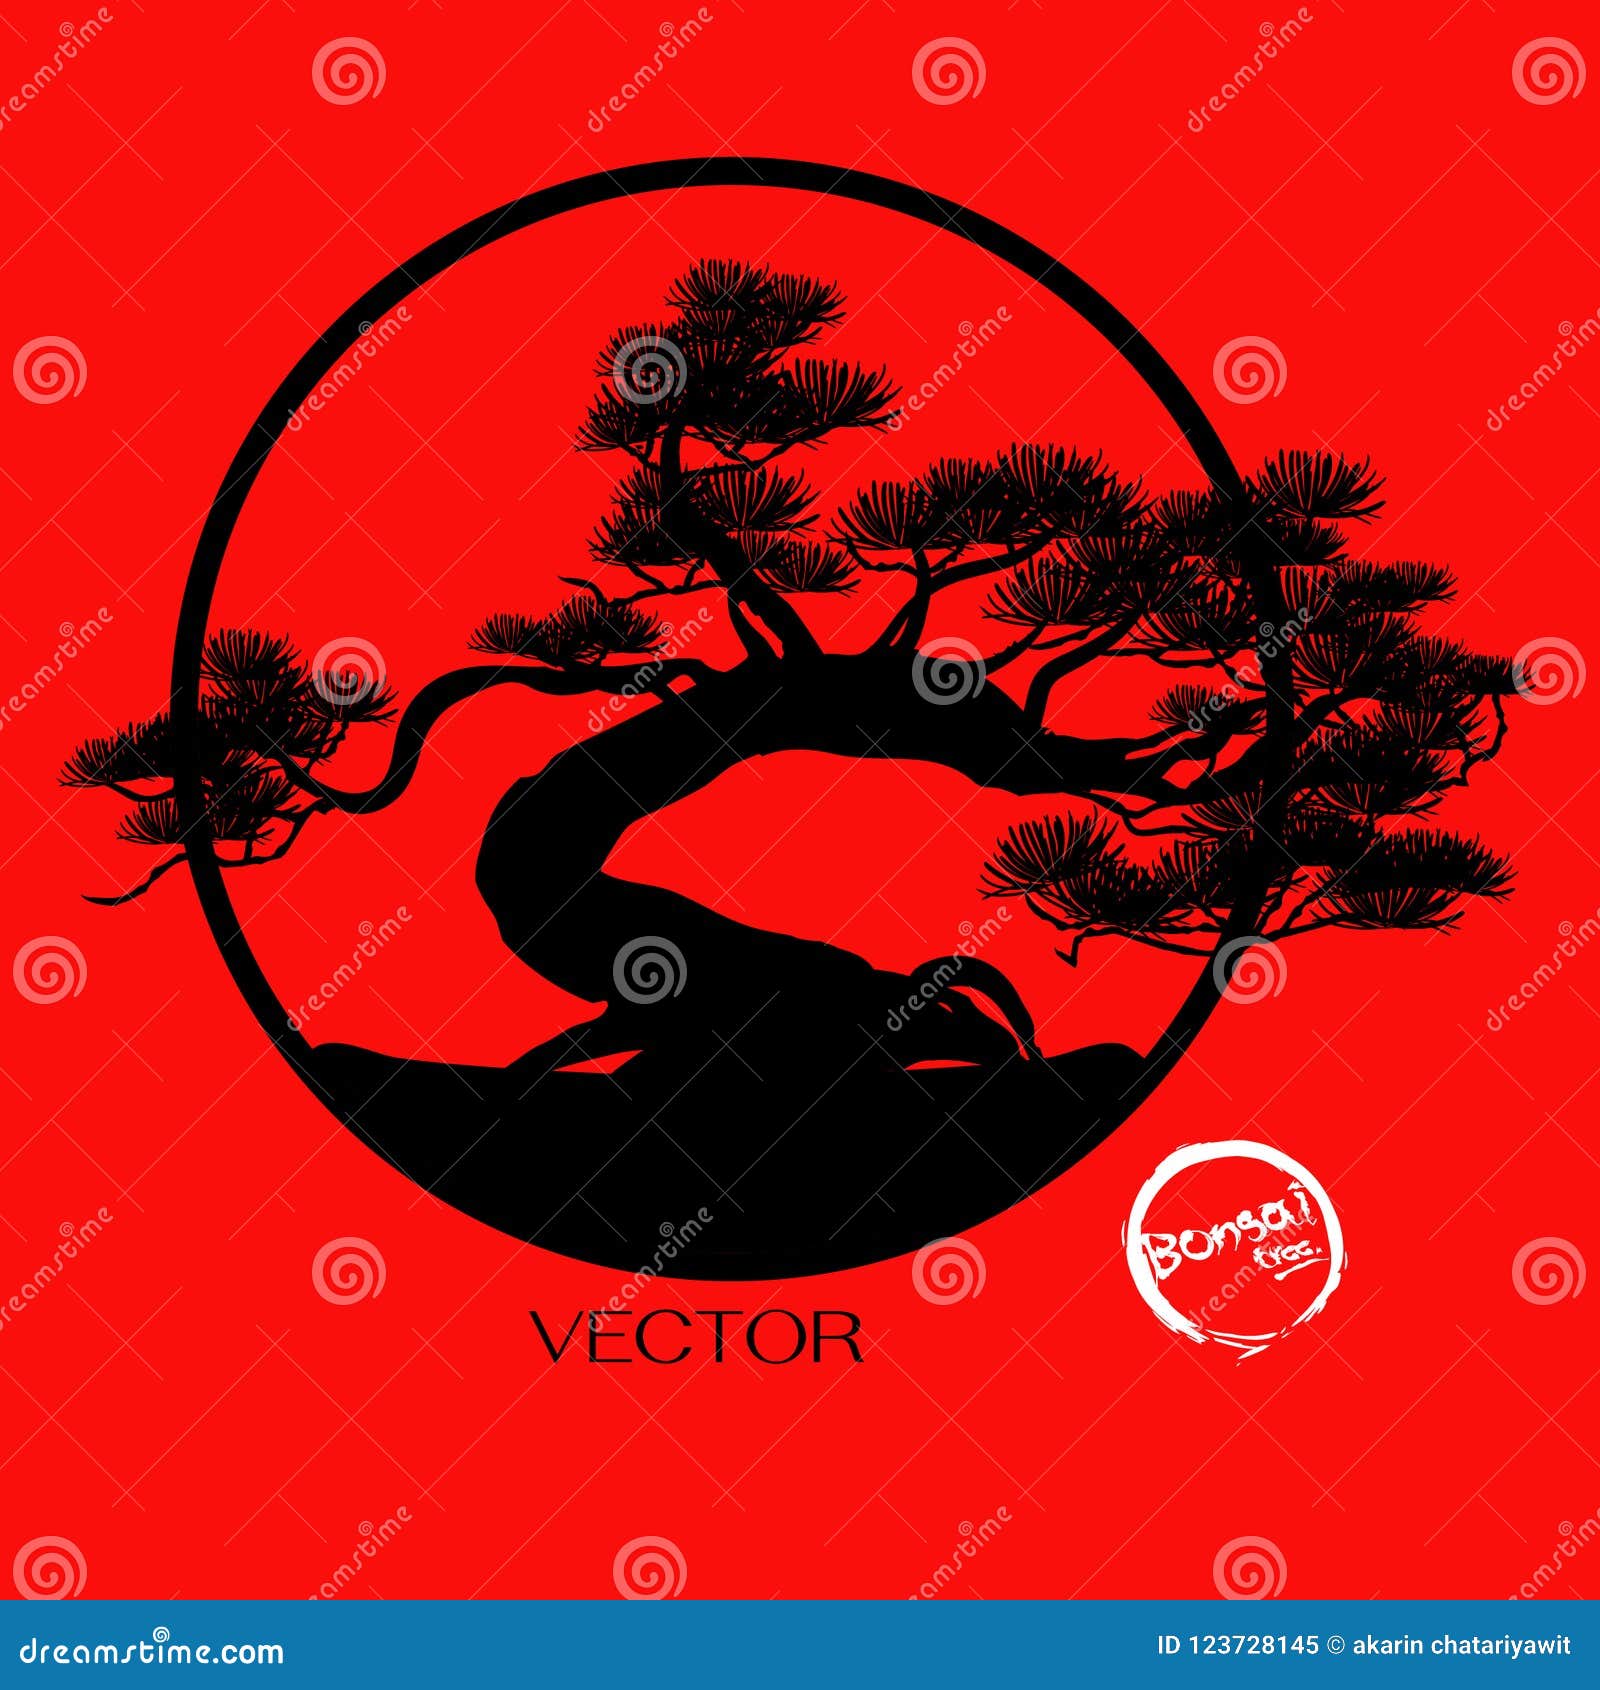 Logo Of Bonsai Tree Silhouette Of Bonsai Detailed Image Vector Illustration Dwarf Trees For Design And Website Mini Tree Stock Vector Illustration Of Garden Decoration 123728145